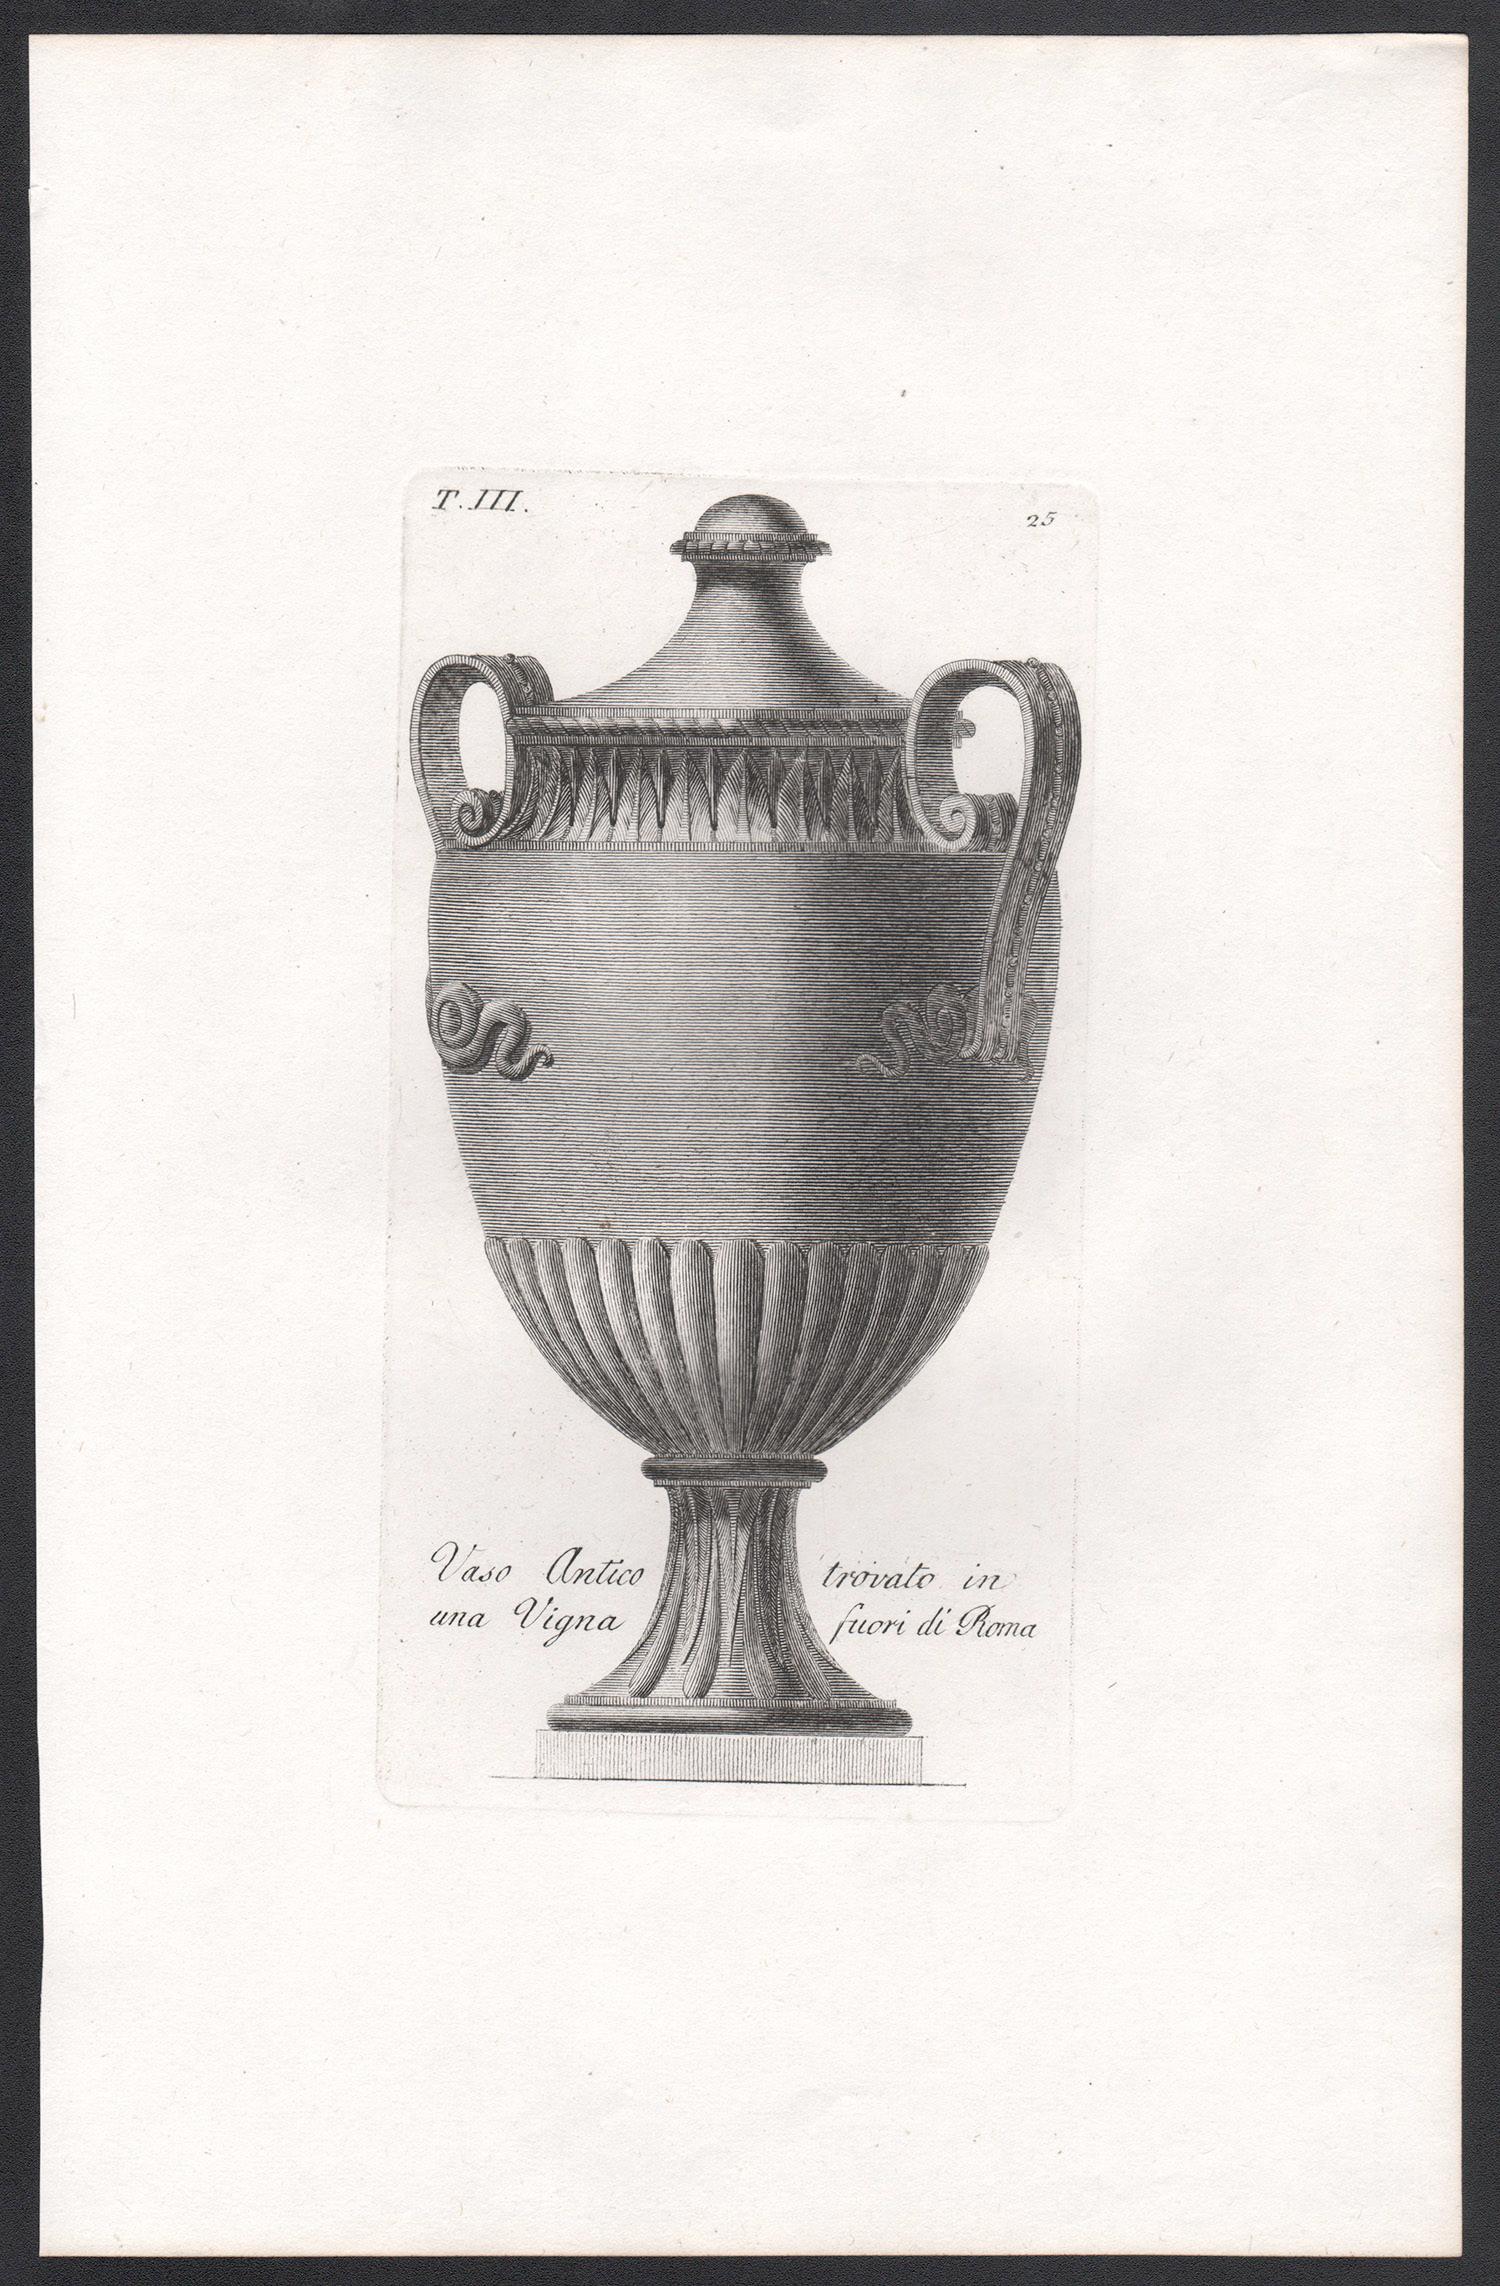 Carlos Antonini Print - 4 Classical Roman vases, early 19th century Italian Grand Tour engraving, c1820